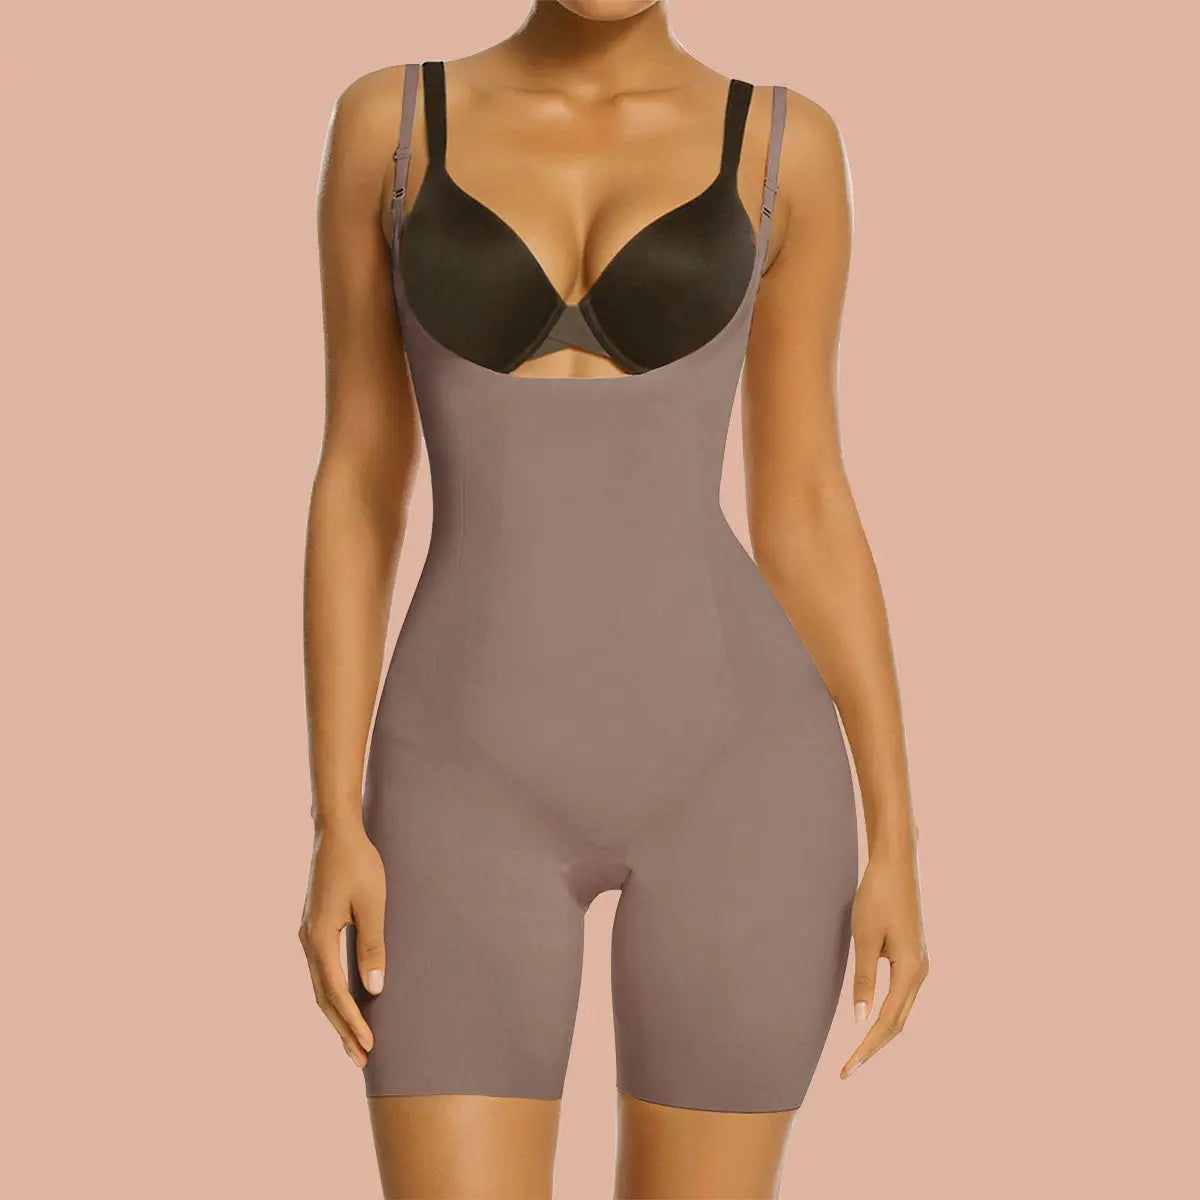 Beonlema Fajas Colombianas Reductoras Modeladoras Mujer Slimming Waist  Trainer Shapewear Tummy Control Butt Lifter Bodys size XXXL Color Black